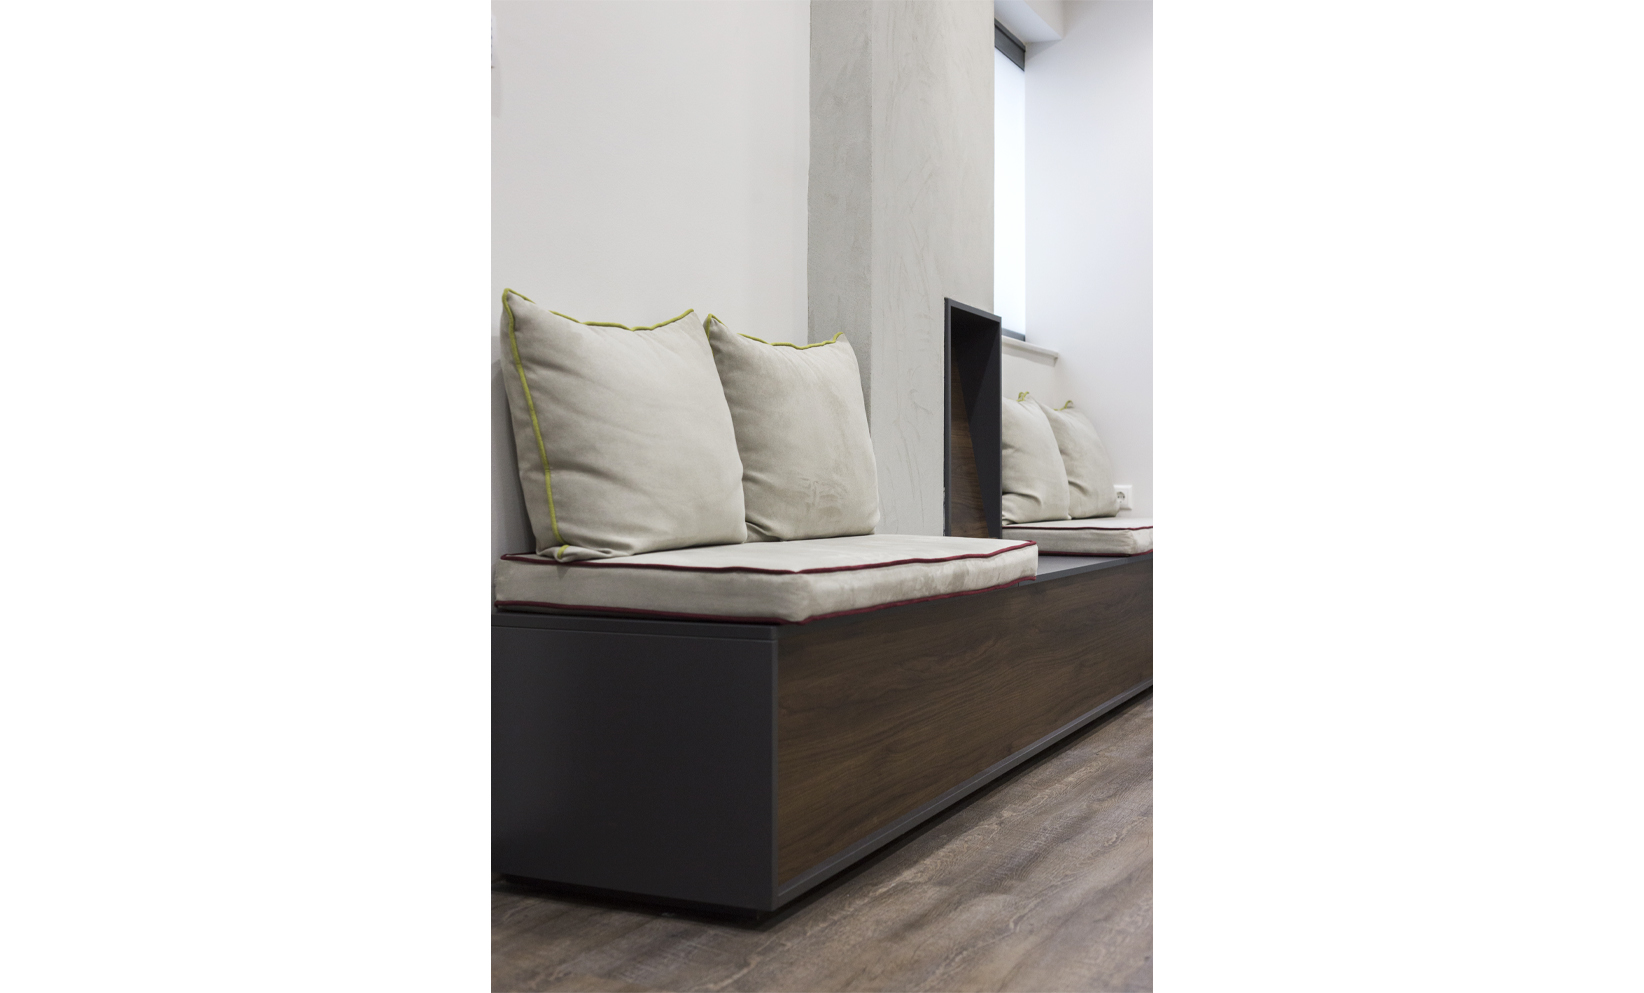 3-interior-design-medical-office-build-bench-wood-graphic-design-metal-marmorino-details